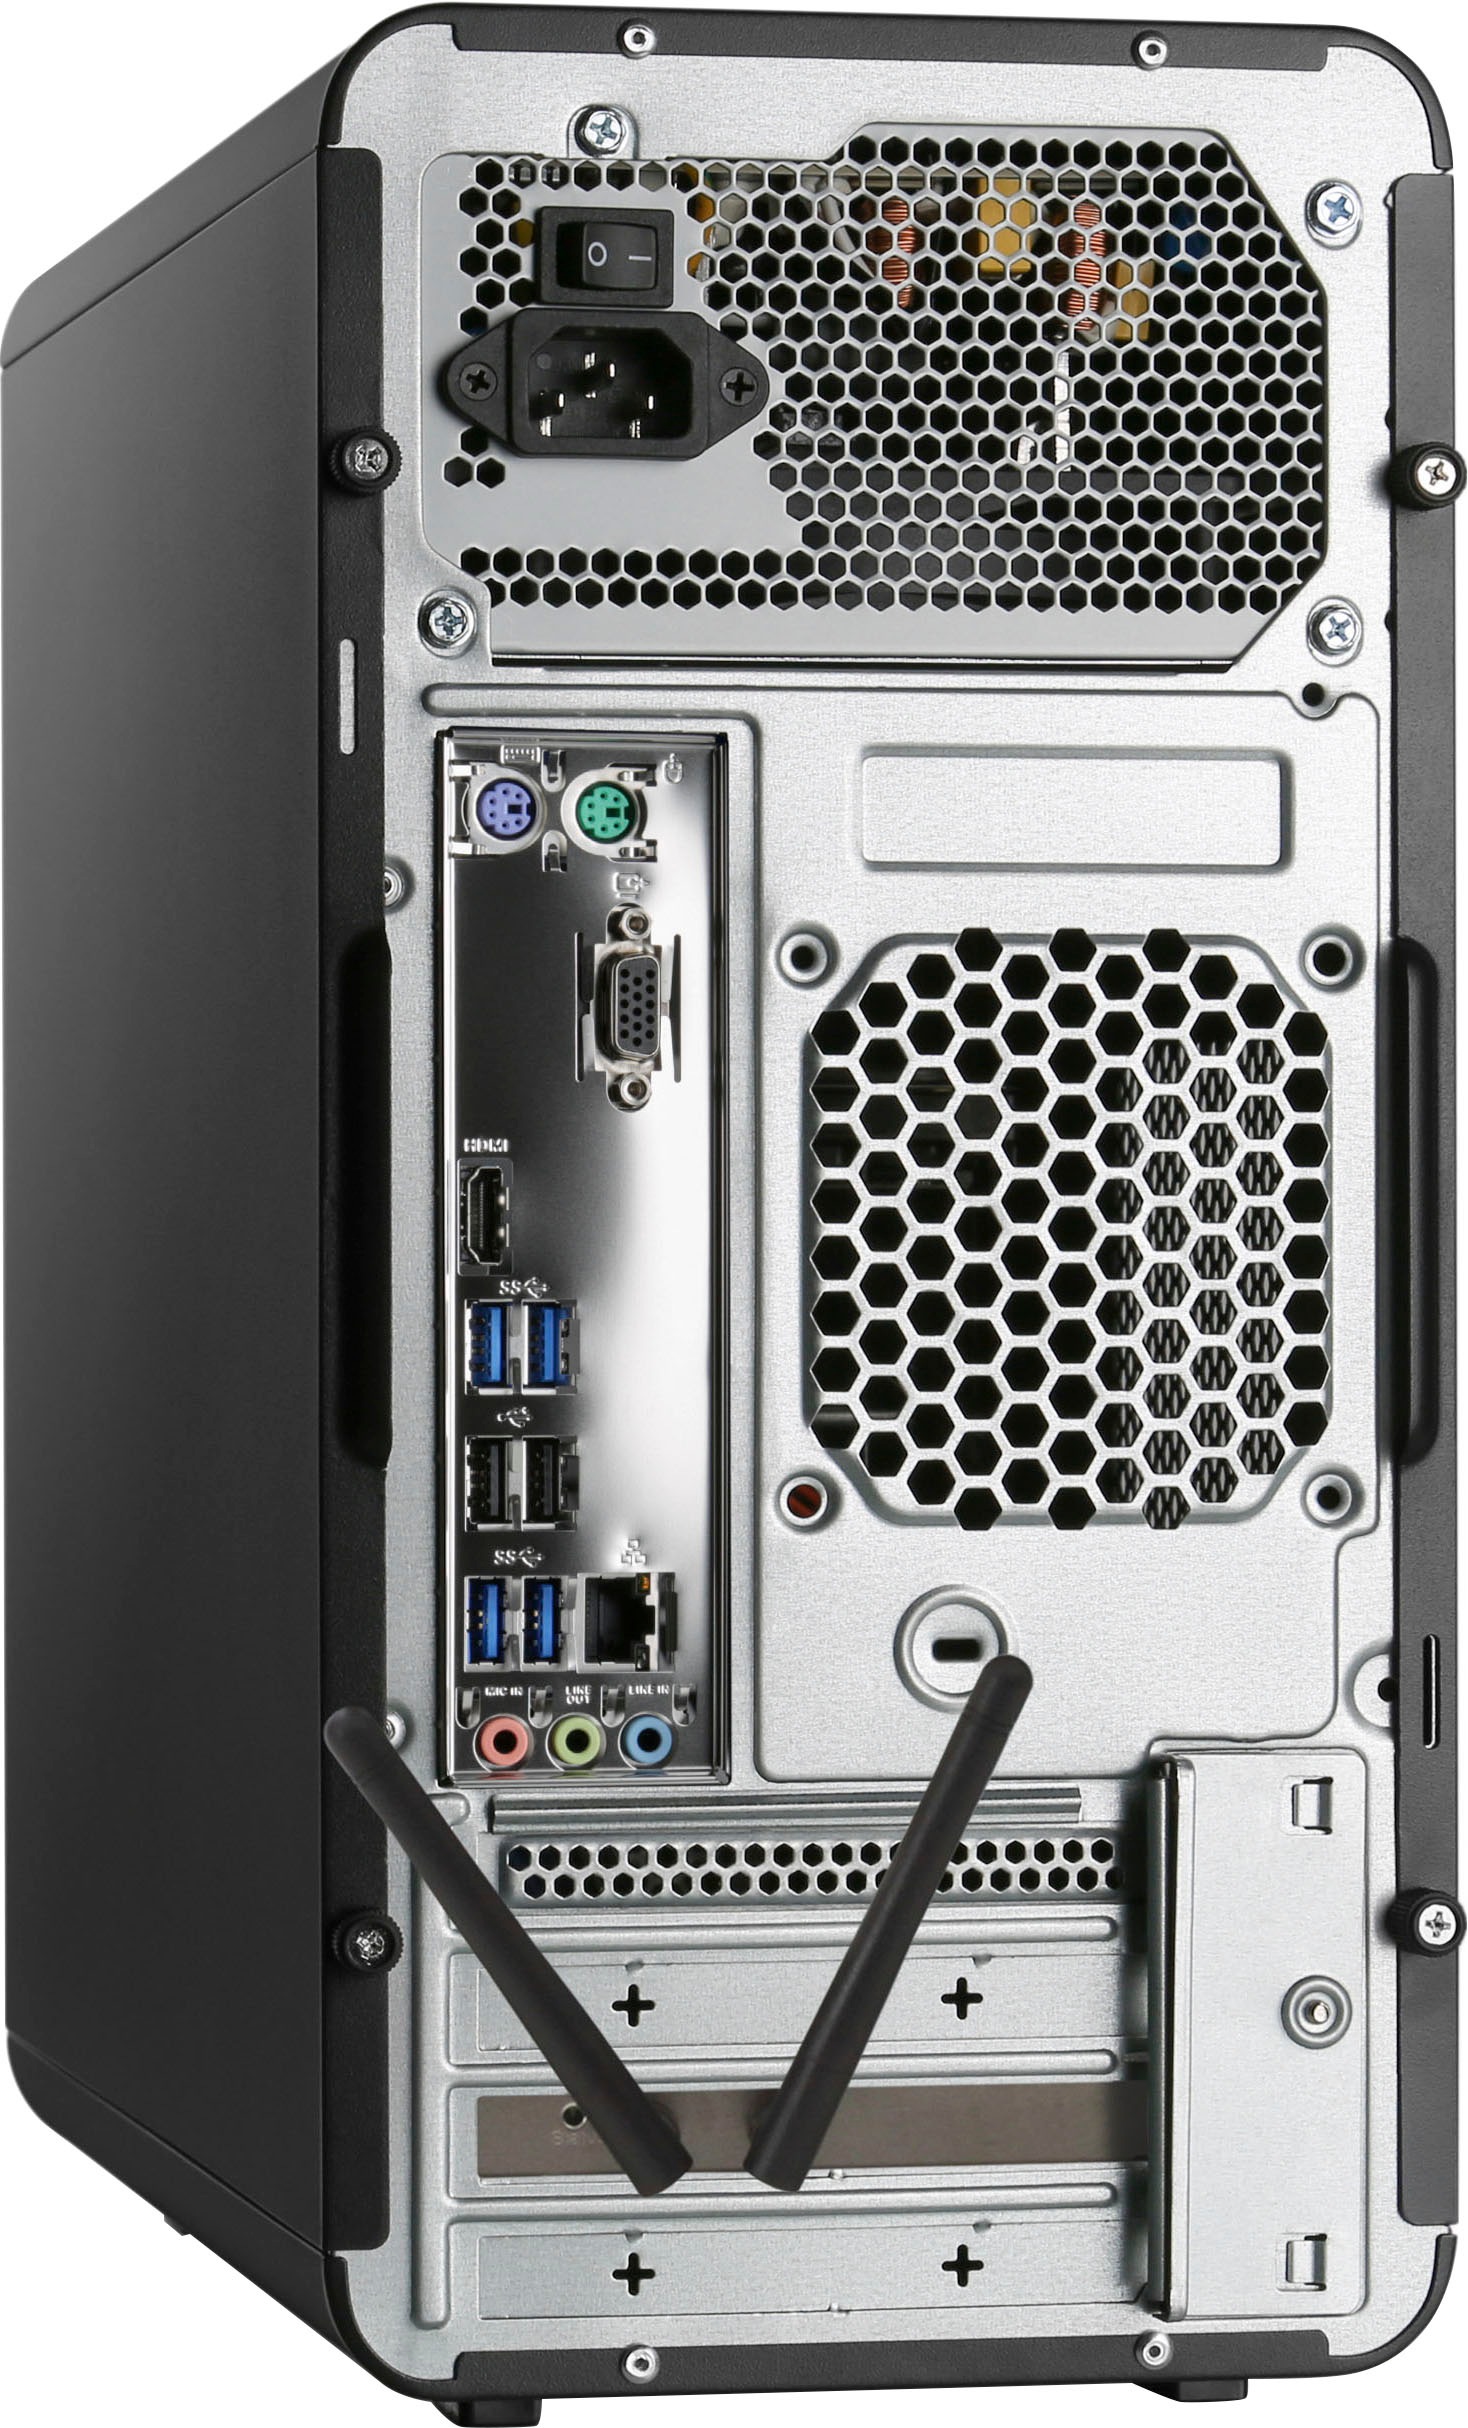 CSL Gaming-PC-Komplettsystem »Sprint V28988« | BAUR